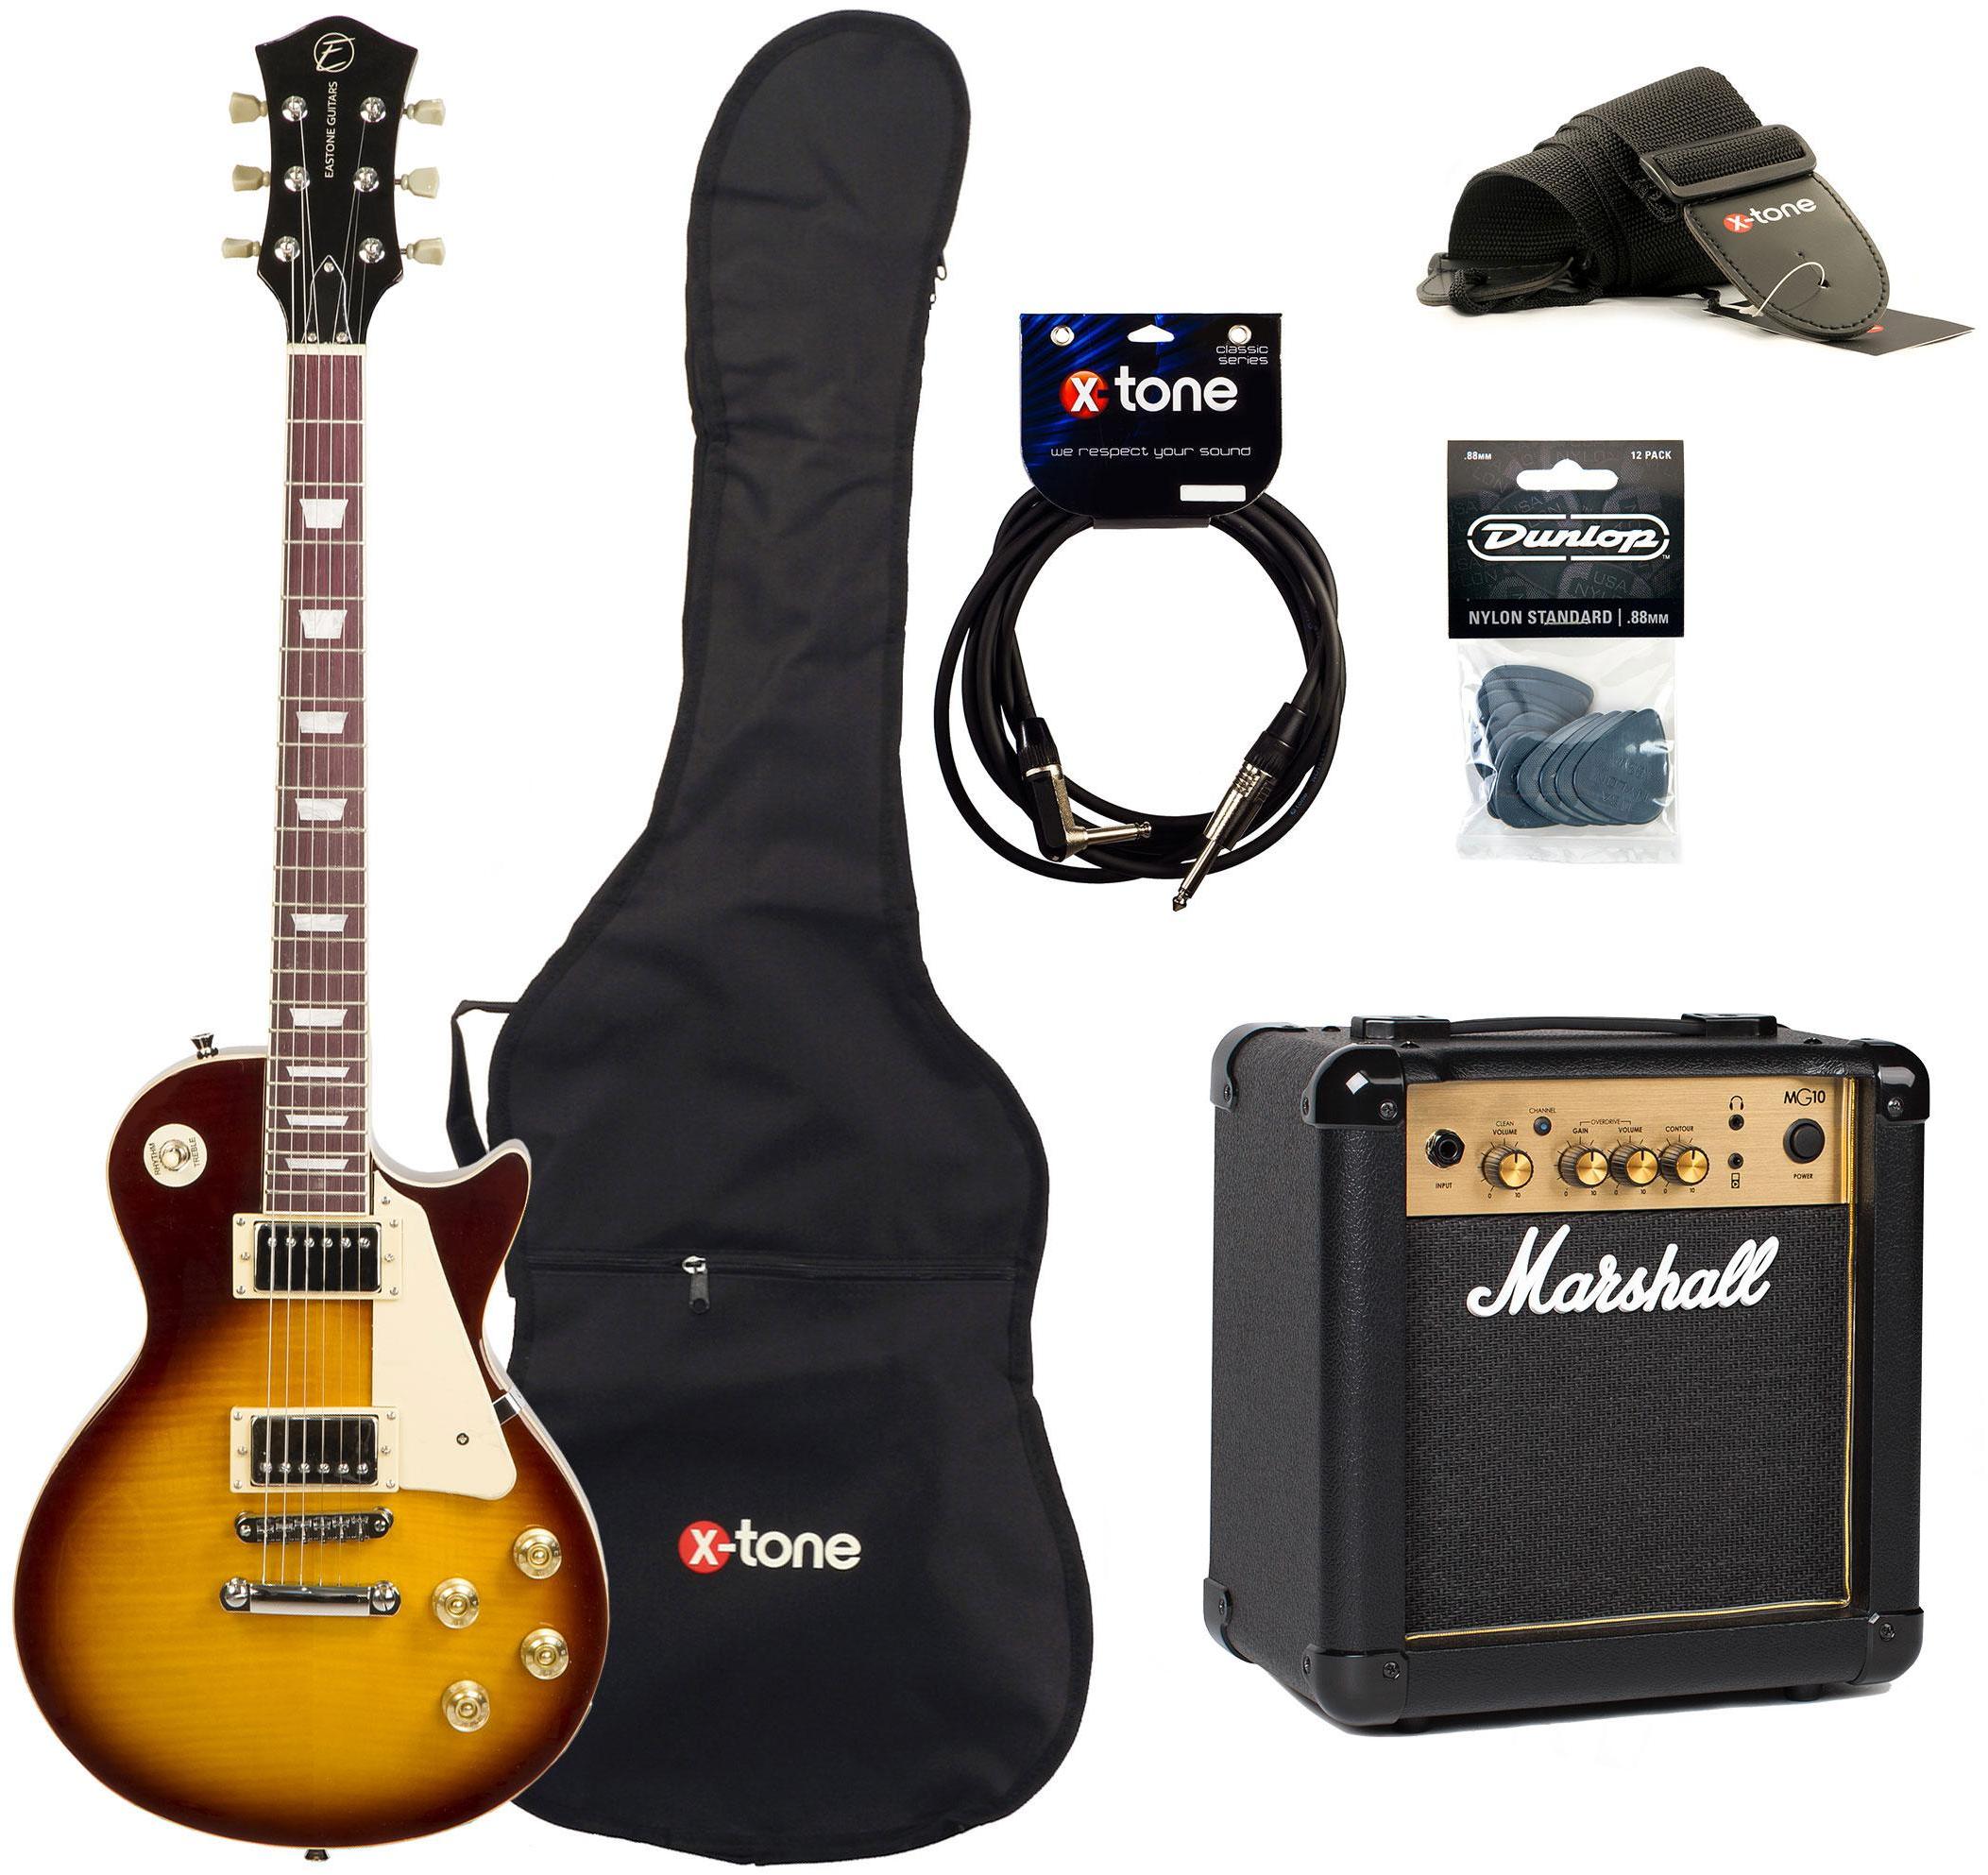 Electric guitar set Eastone LP200 HB +MARSHALL MG10 10W +CABLE +MEDIATORS +HOUSSE - Honey sunburst